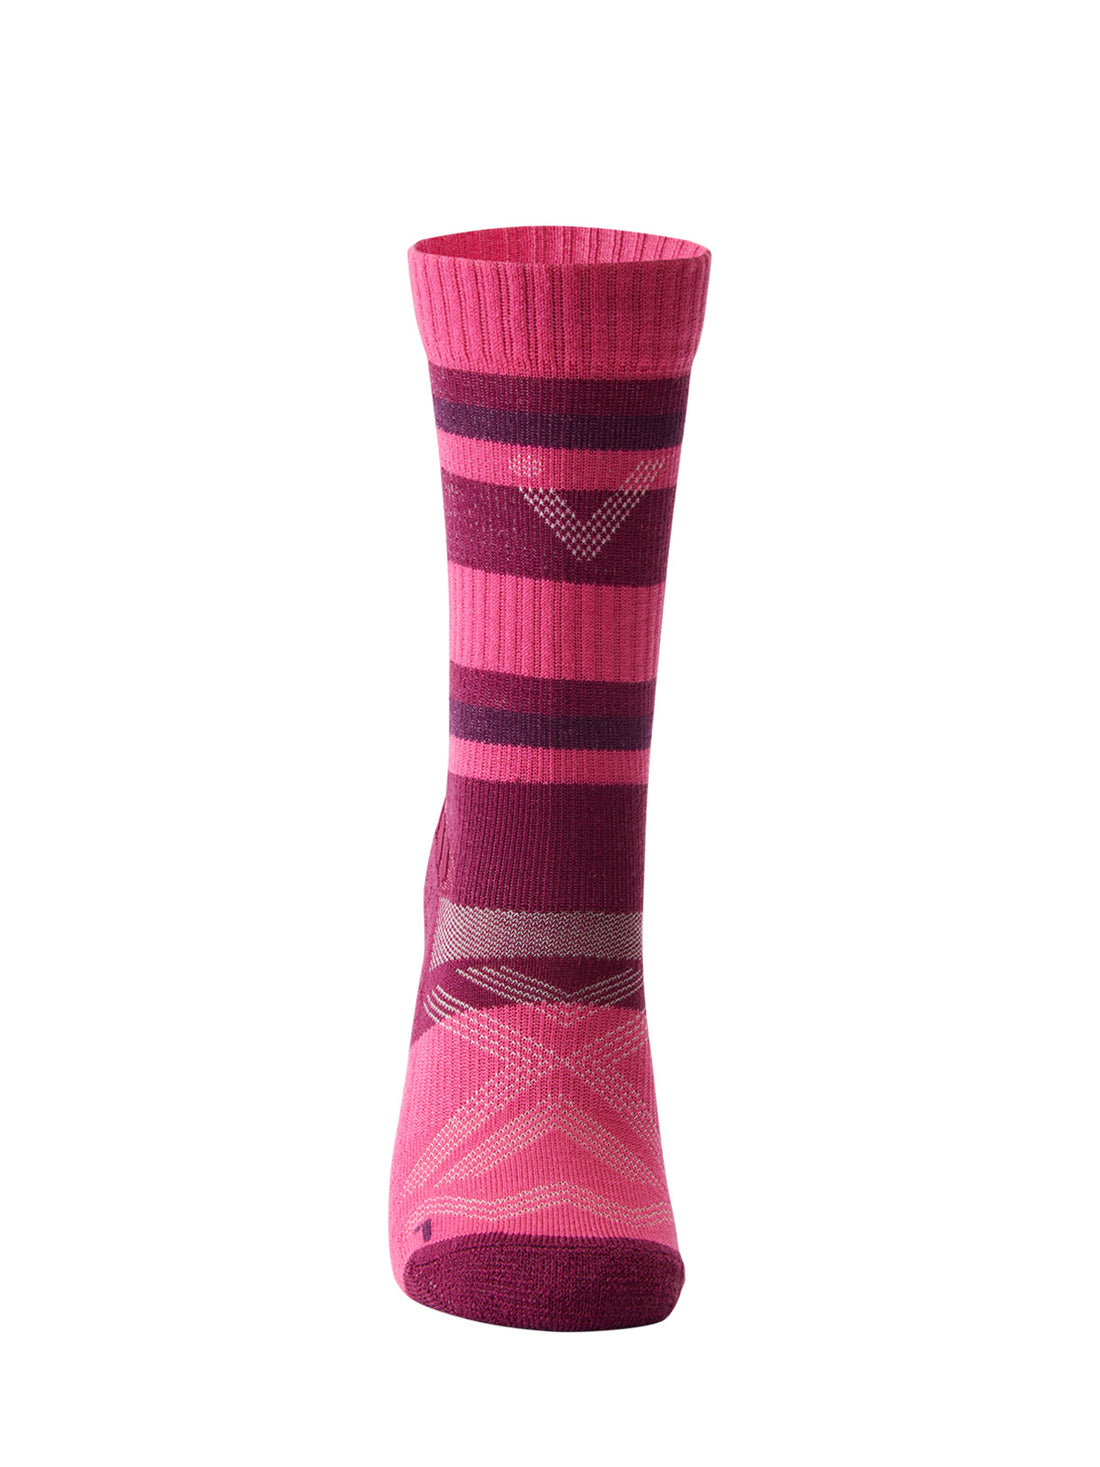 Women's Prism Wool Hiking Socks